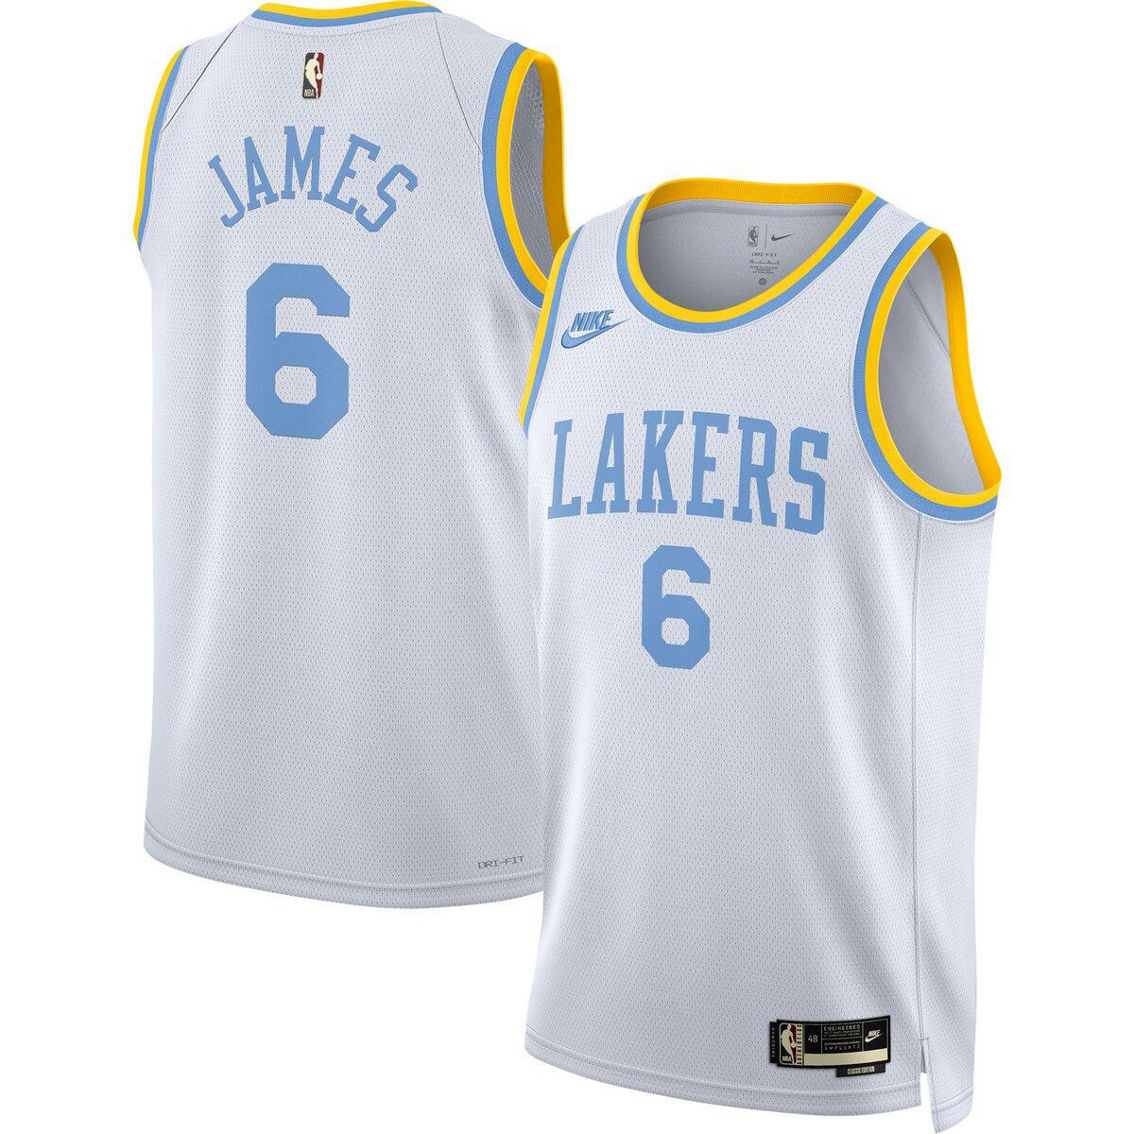 Nike Men's LeBron James White Los Angeles Lakers Swingman Jersey - Classic Edition - Image 2 of 4